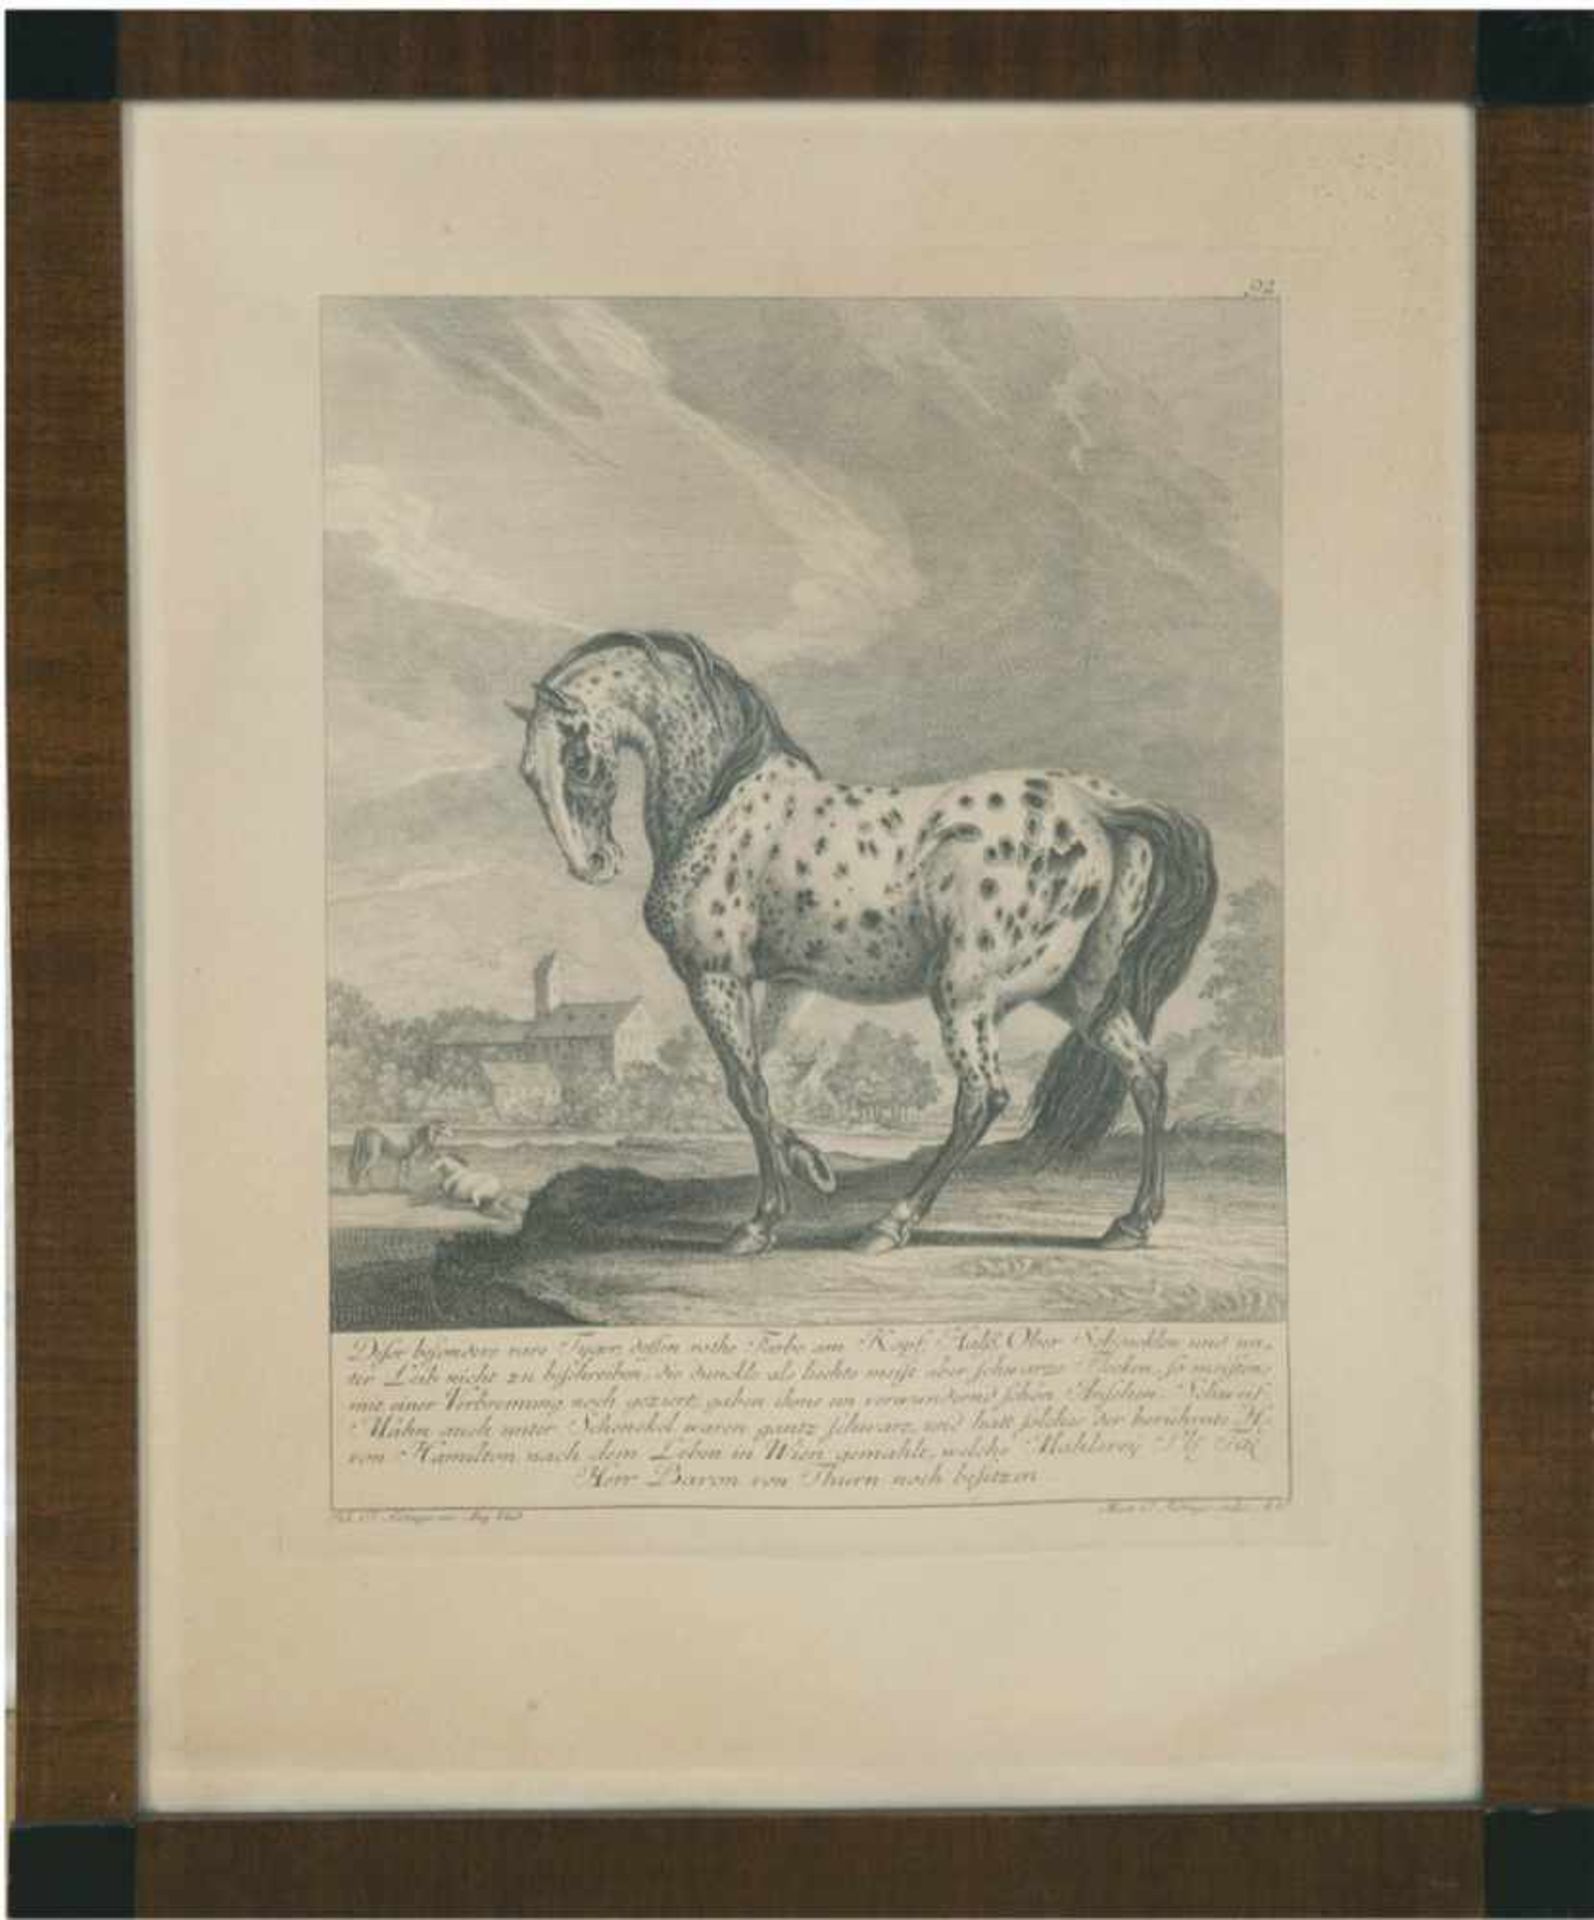 Ridinger, Johann Elias (1698 Ulm-1767 Augsburg) "Dieser besonders rare Tyger, dessen roteFarbe am